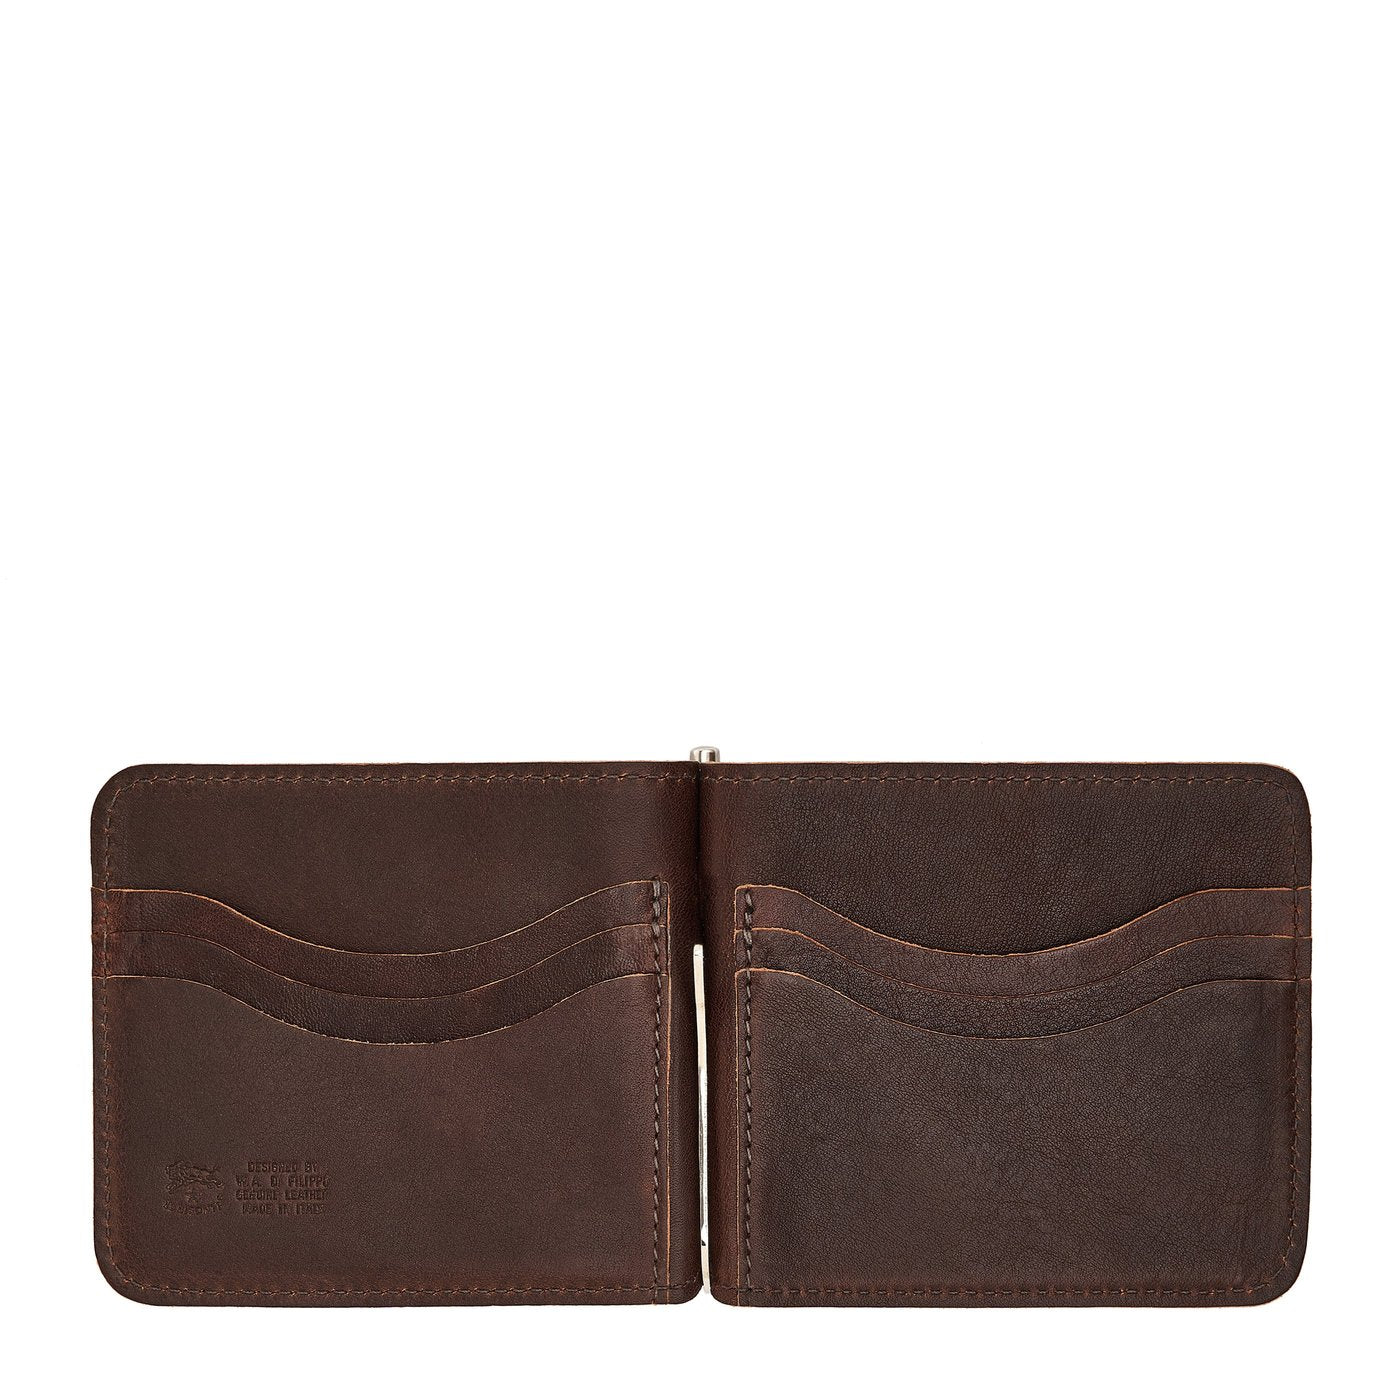 Men's wallet in vintage leather color coffee